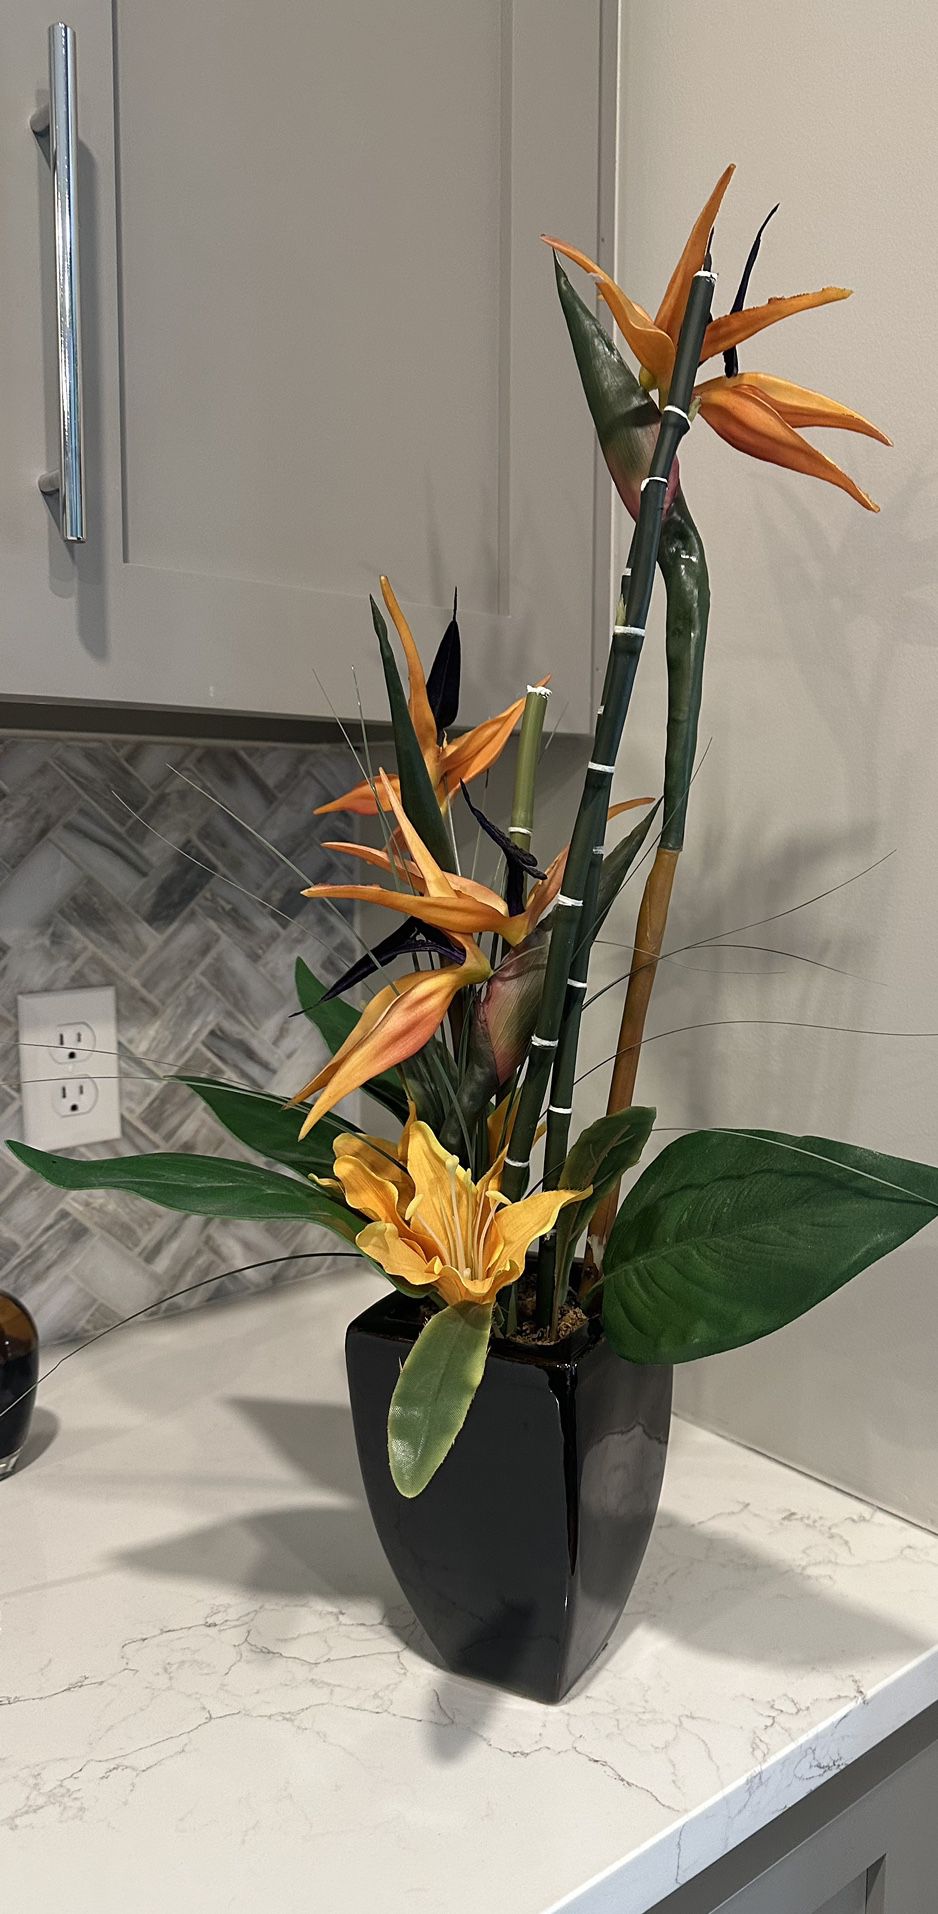 Flowers - Artificial - Orange Flowers In A Black Vase- Beautiful! 